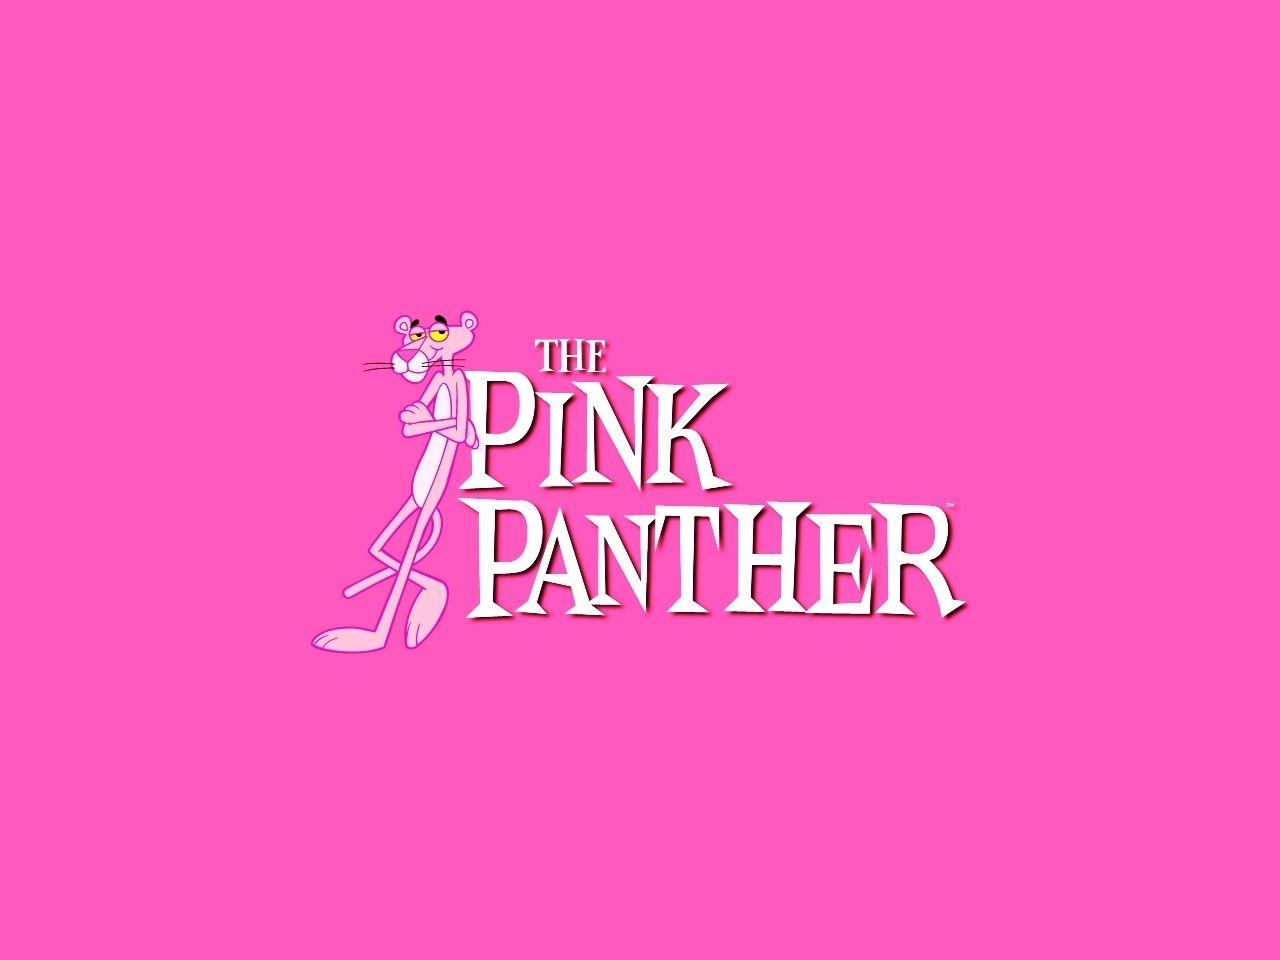 The Pink Panther Cartoon Minimalist HD Wallpaper. Download HD